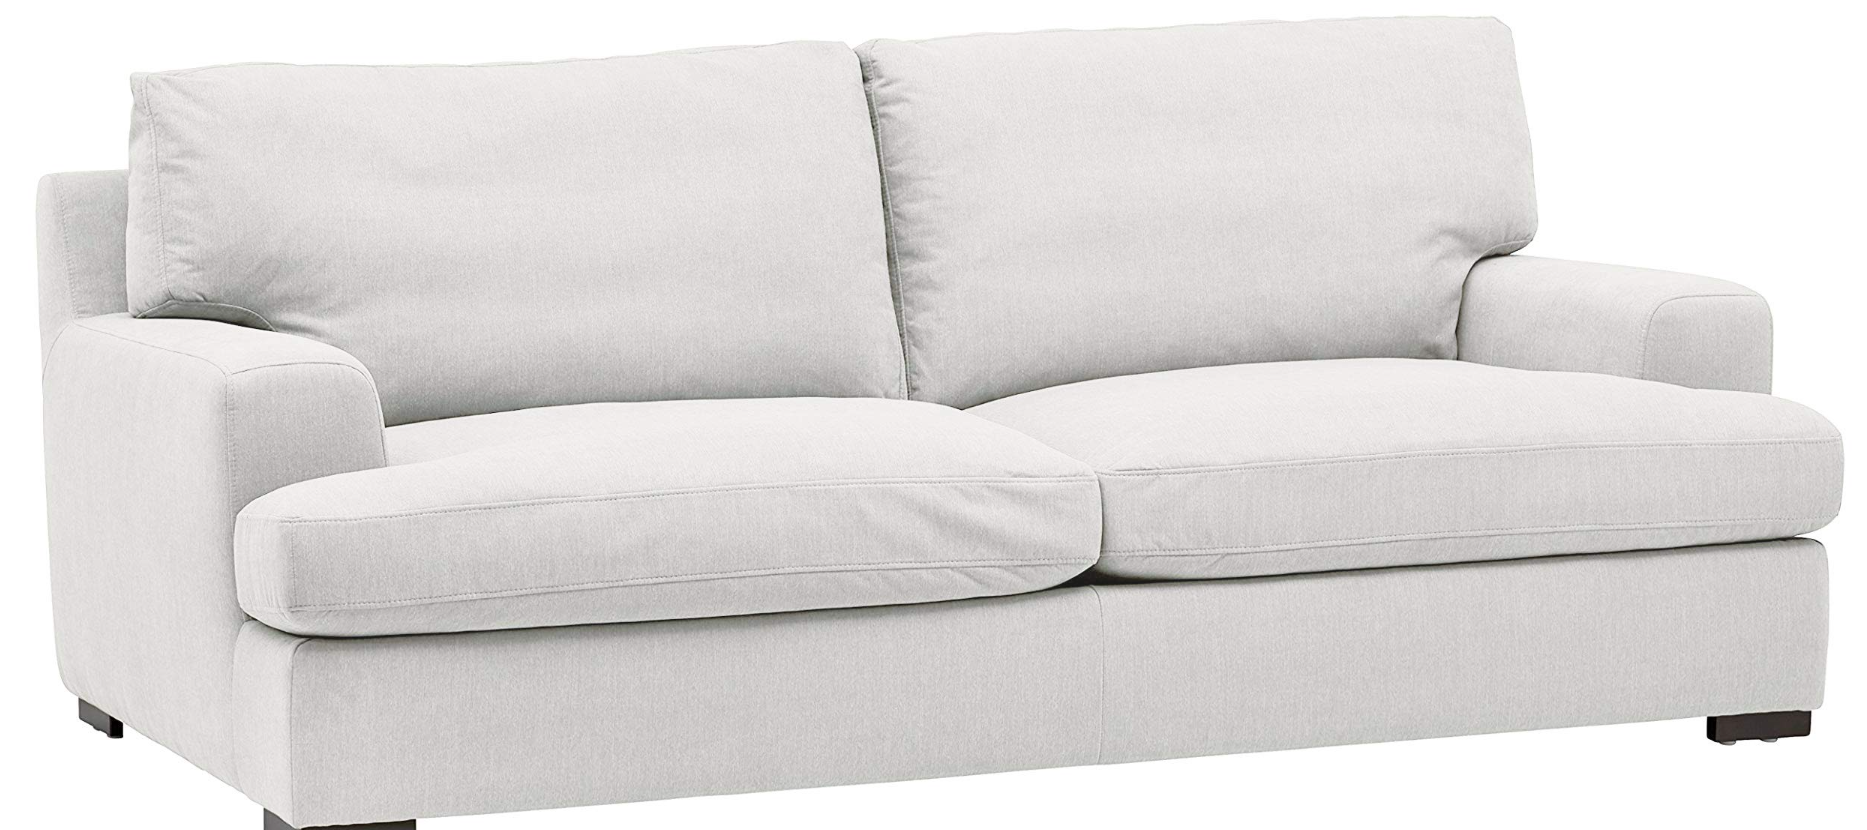 Stone & Beam Lauren Down-Filled Sofa Couch in elegant living room setting